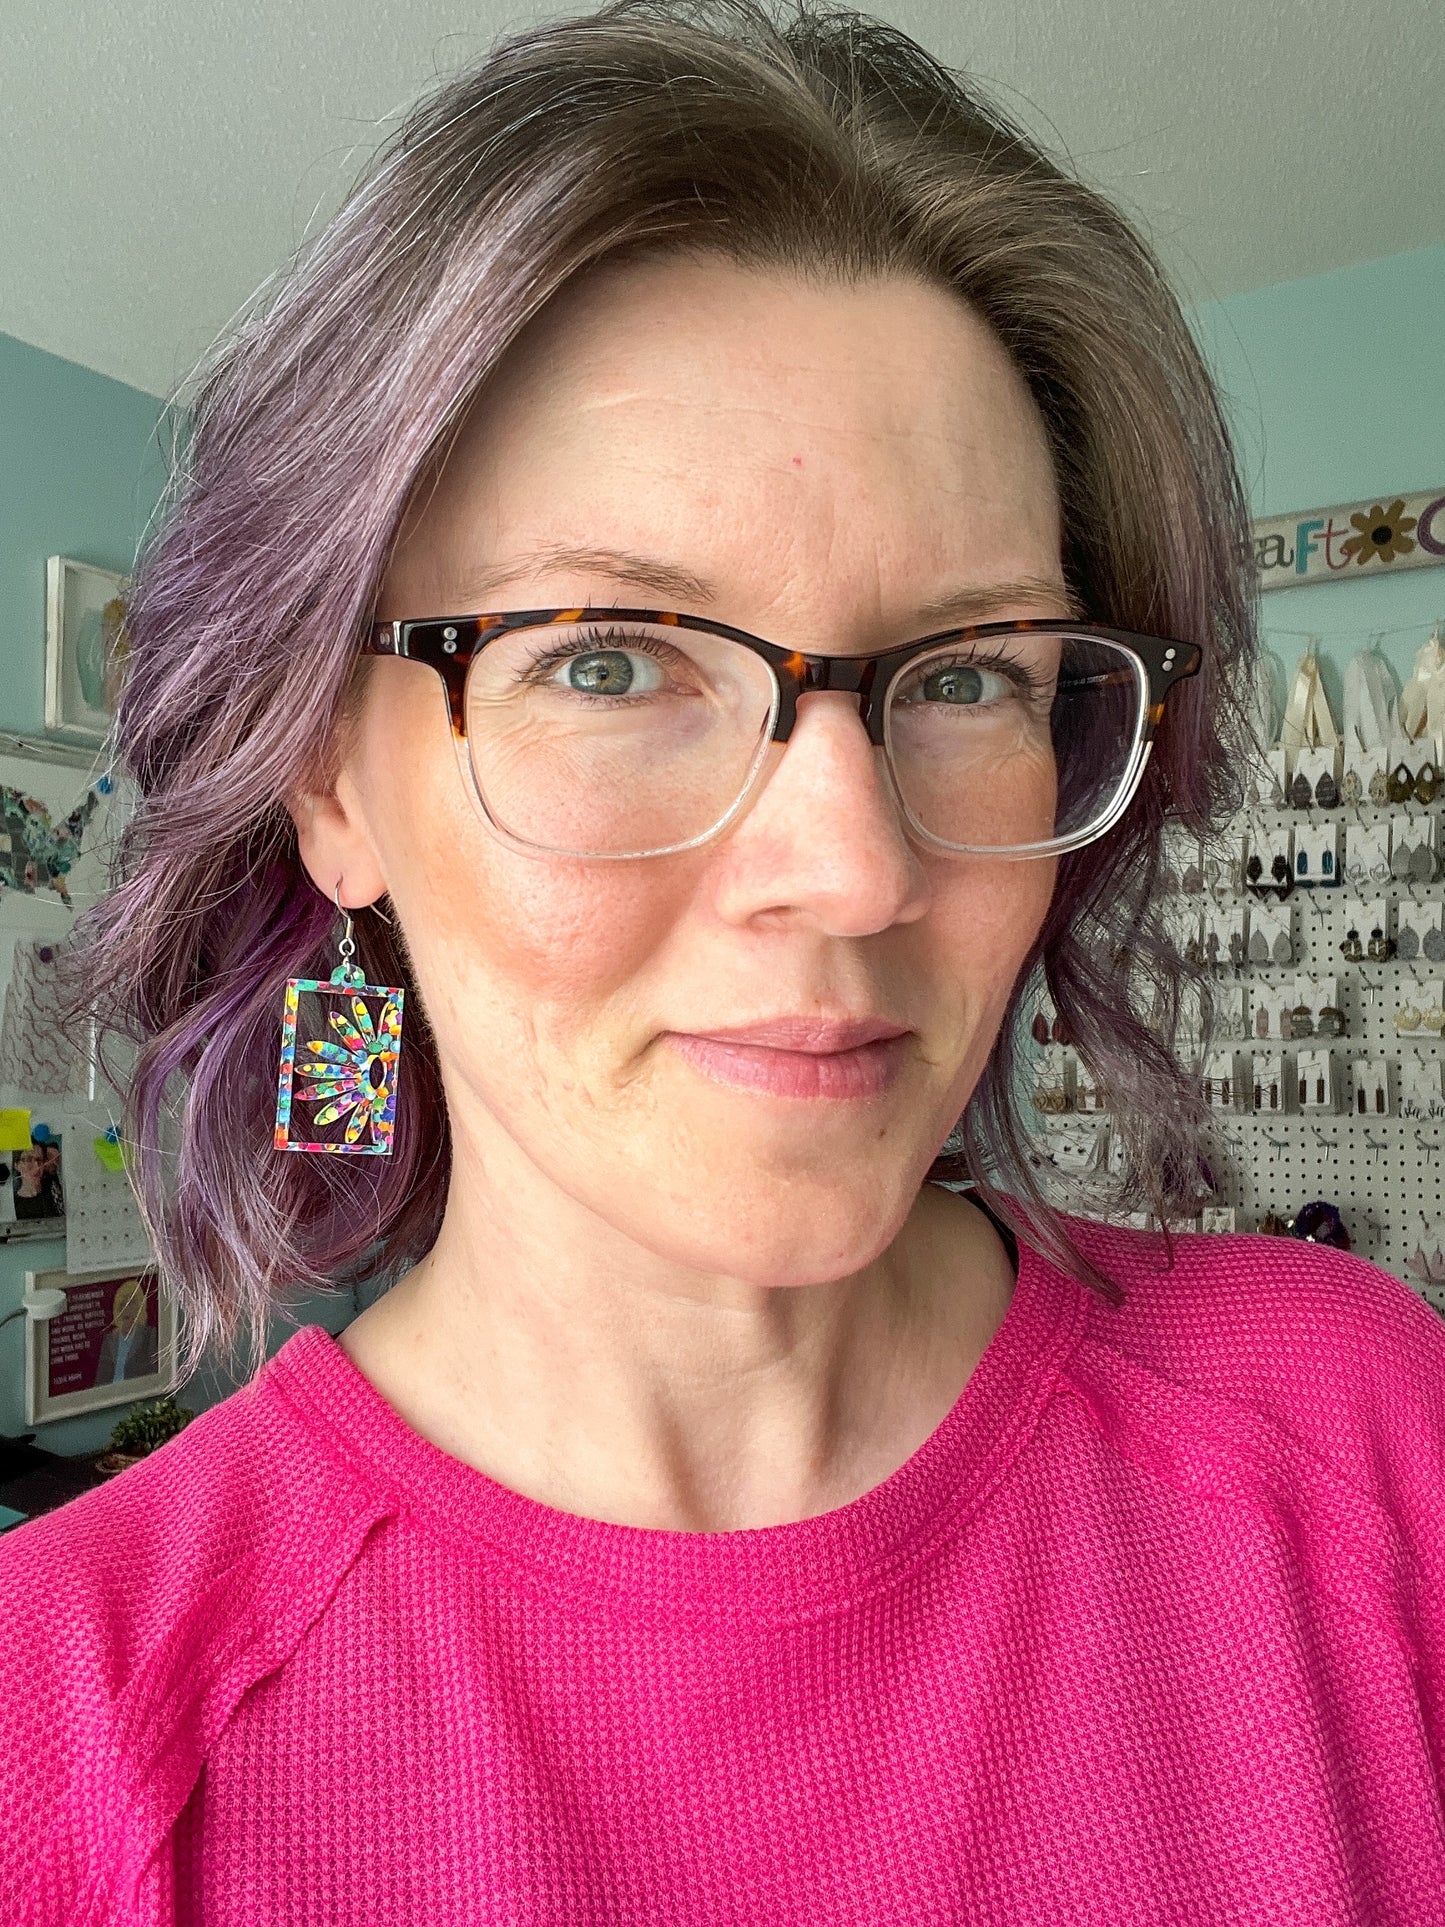 Rainbow Dots Acrylic Daisy Earrings: Choose From 2 Styles